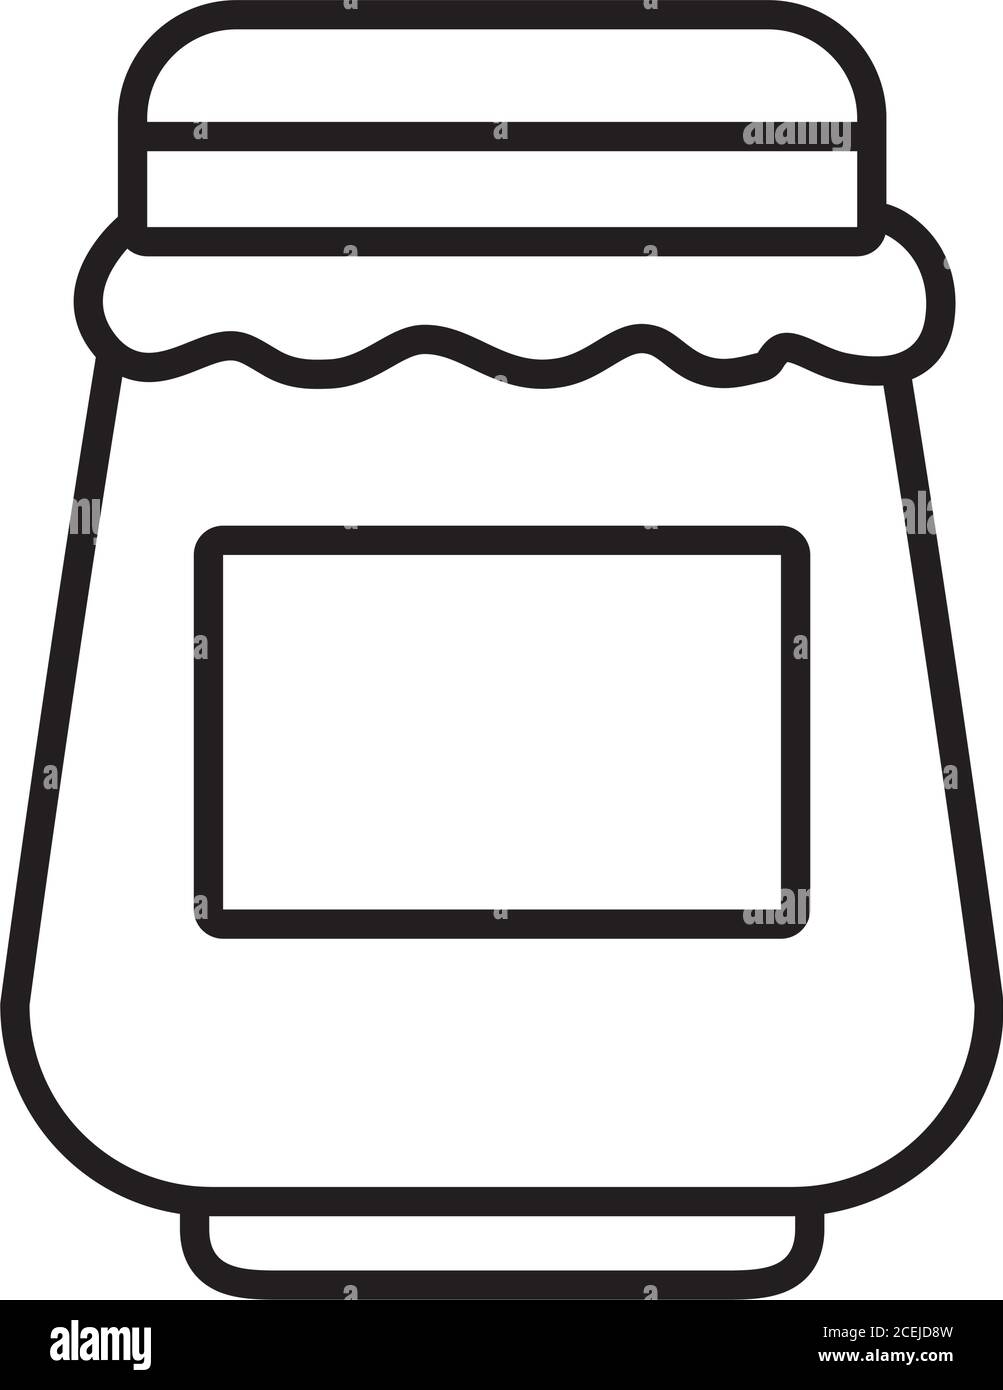 jam bottle icon over white background, line style, vector illustration Stock Vector